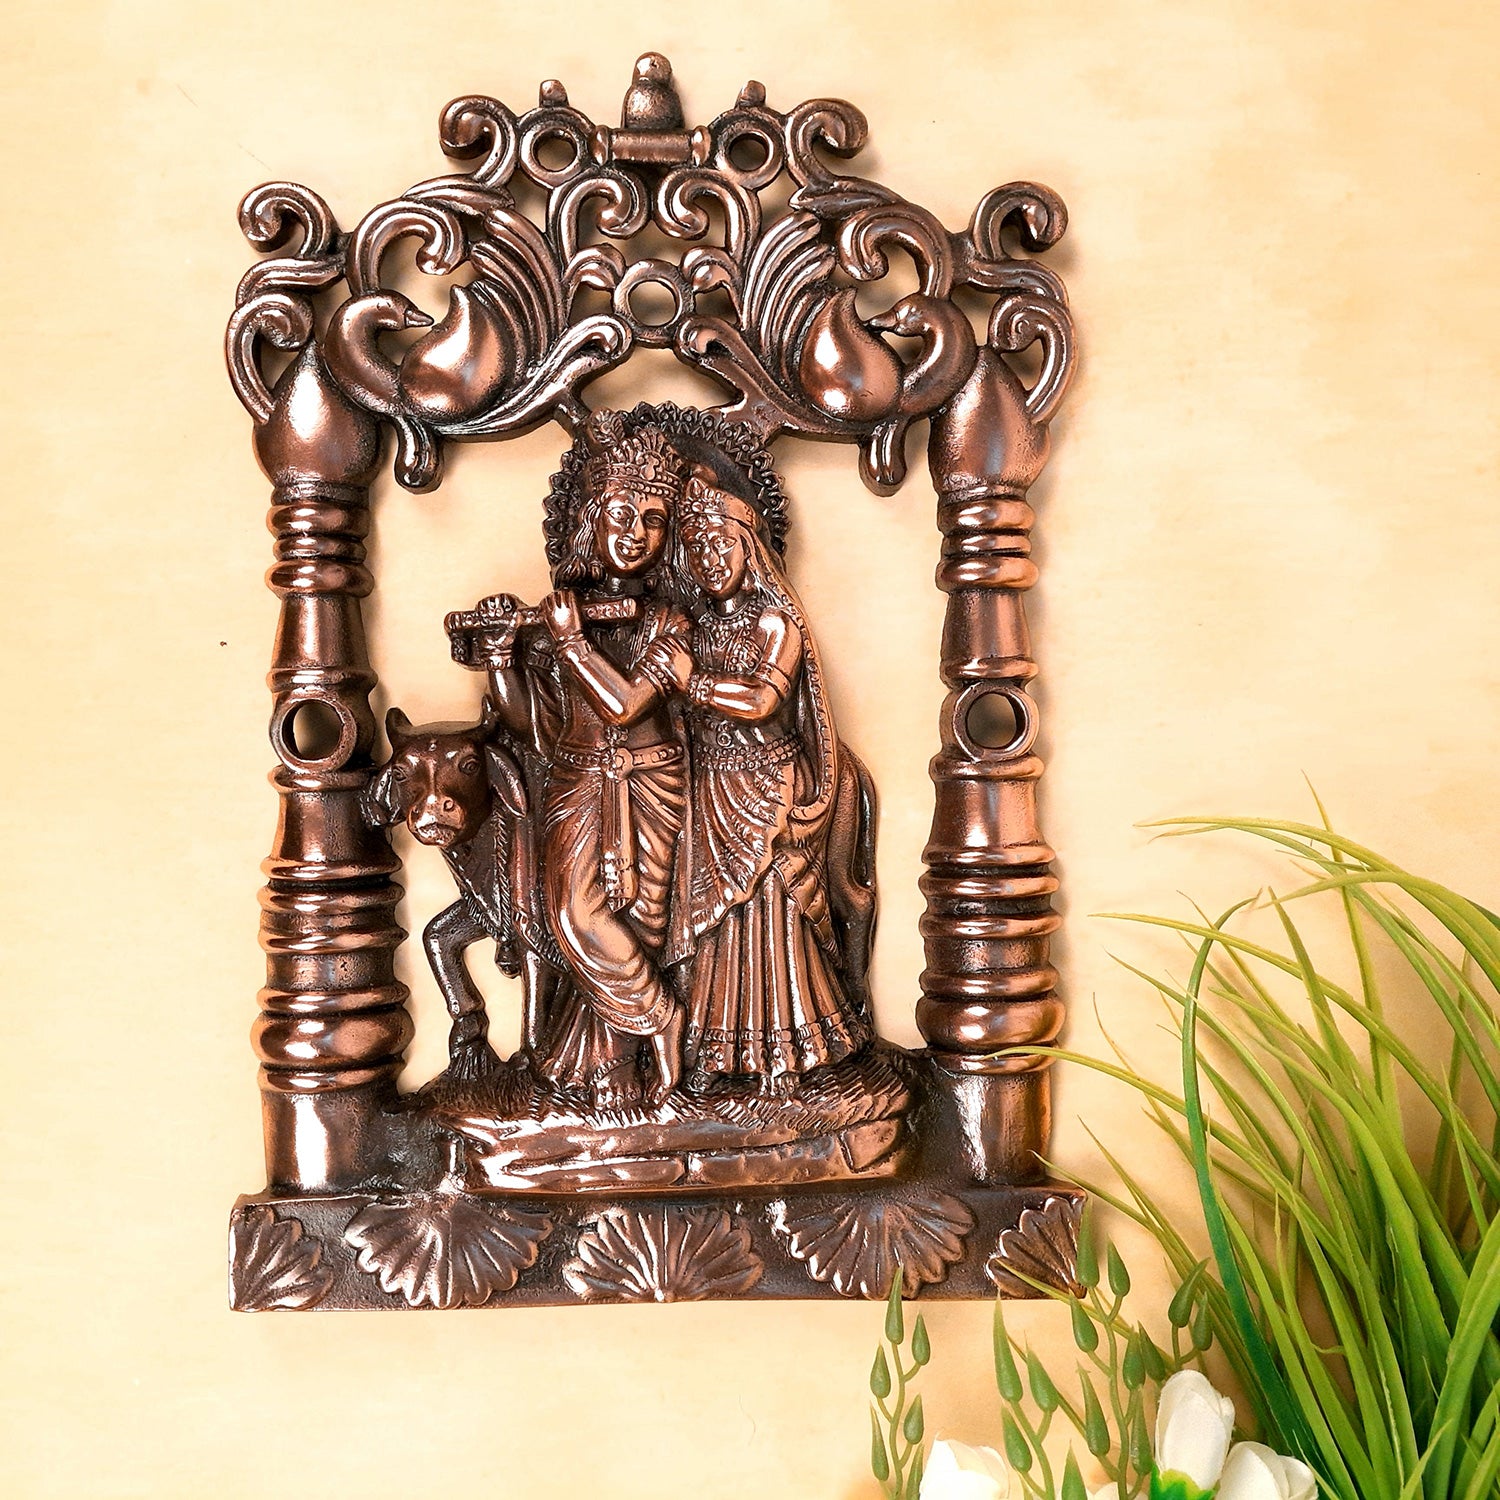 Radha Krishna Wall Hanging Idol | Shri Radha Krishna With Cow Wall Decor Statue Murti - for Gift, Home, Living Room, Office, Puja Room Decoration & Wedding Gifts - 14 Inch - Apkamart